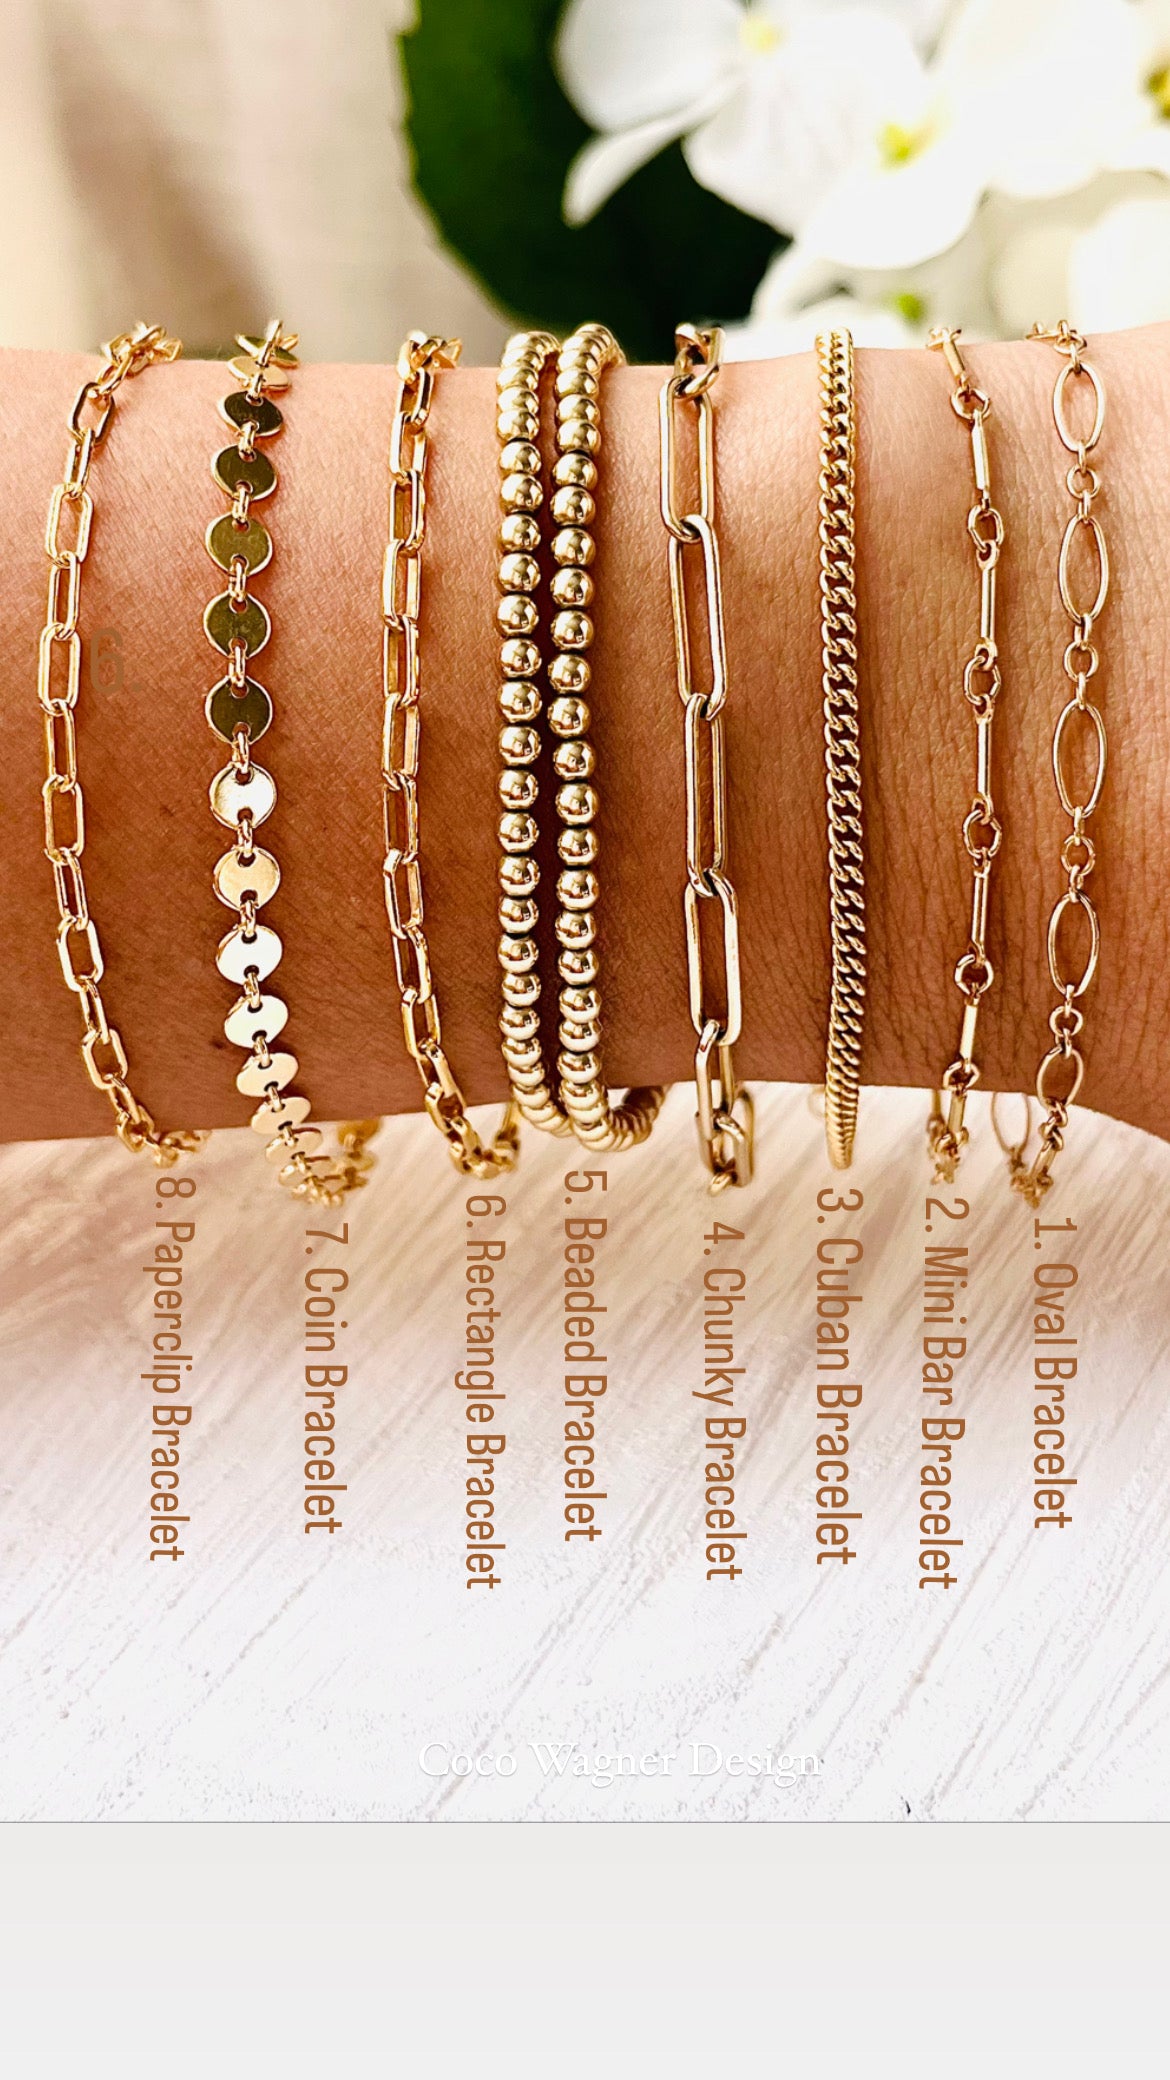 Minimalist Bracelet, Chain and Link Bracelet, 14K Gold Filled Bracelet, Stack Bracelet, Cuban Chain, Paperclip Chain, Gold Link bracelet, Coco Wagner Design